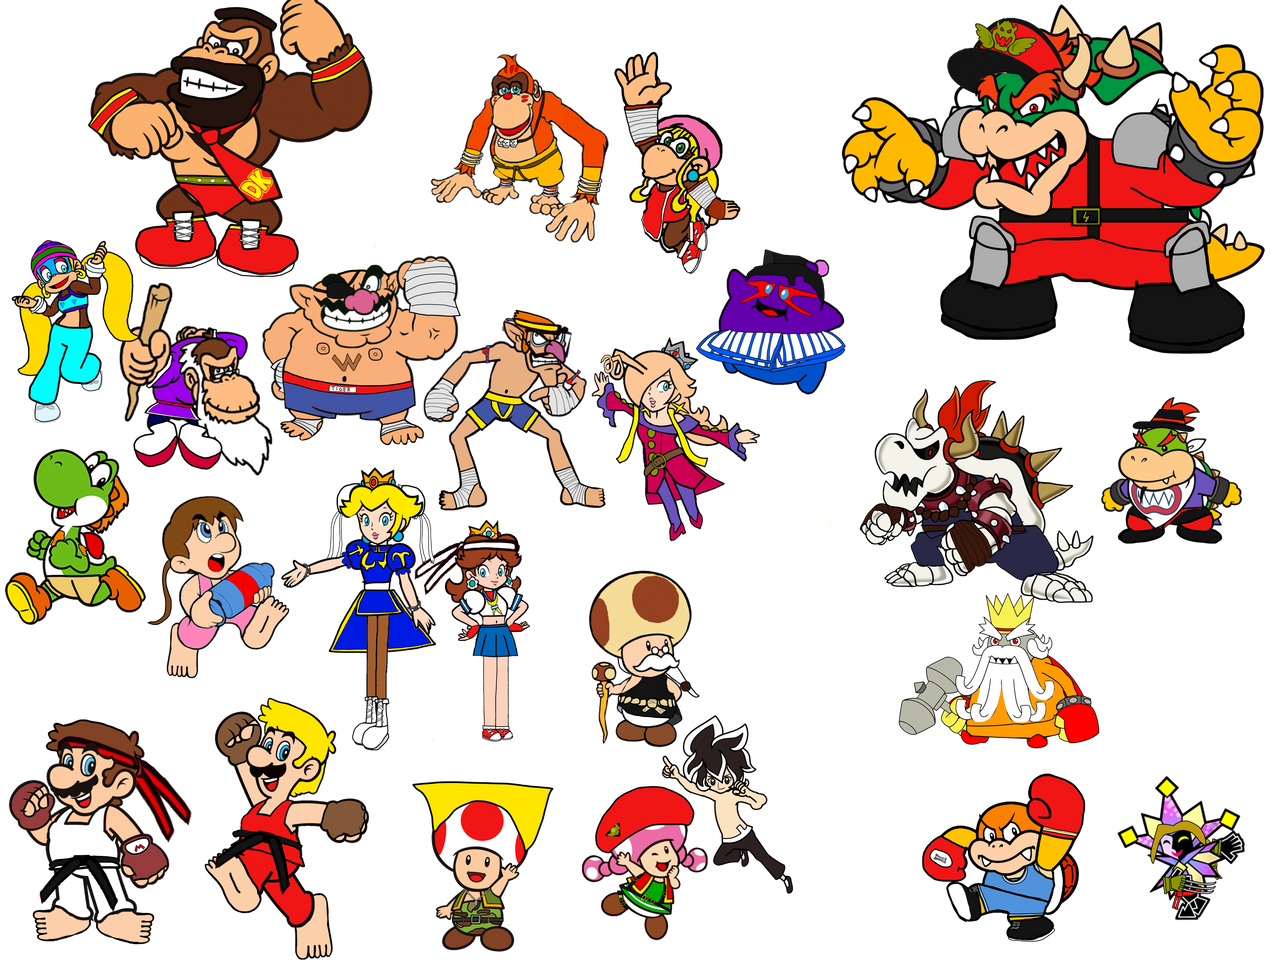 Super Mario Run - Playable Characters by DrewBear0496 on DeviantArt